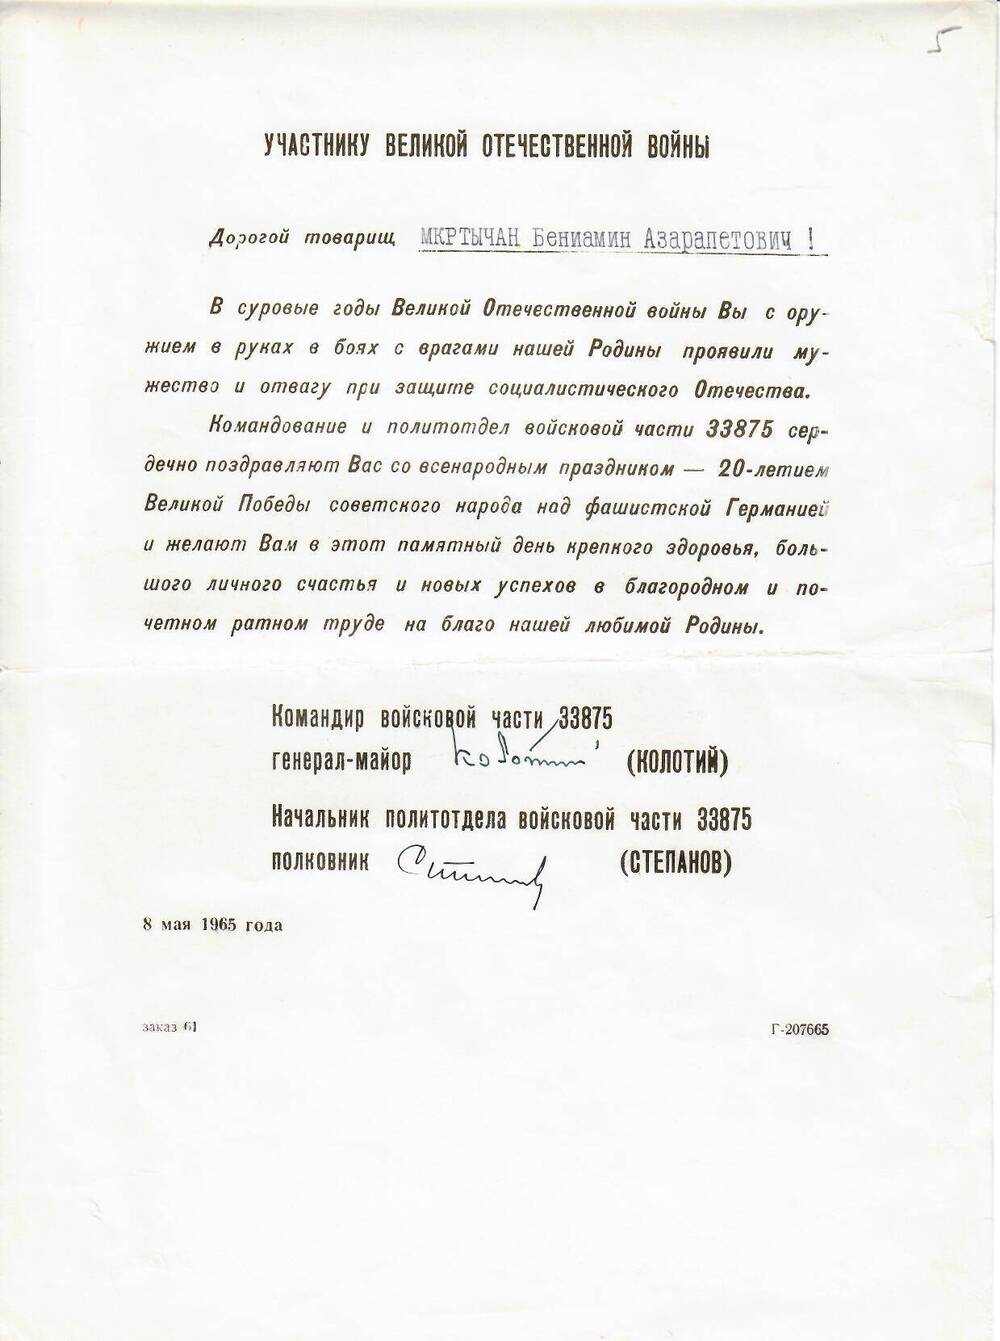 Документы уроженца г.Владикавказа (г.Орджоникидзе) генерал-майора Мкртычана Бениамина Азарапетовича